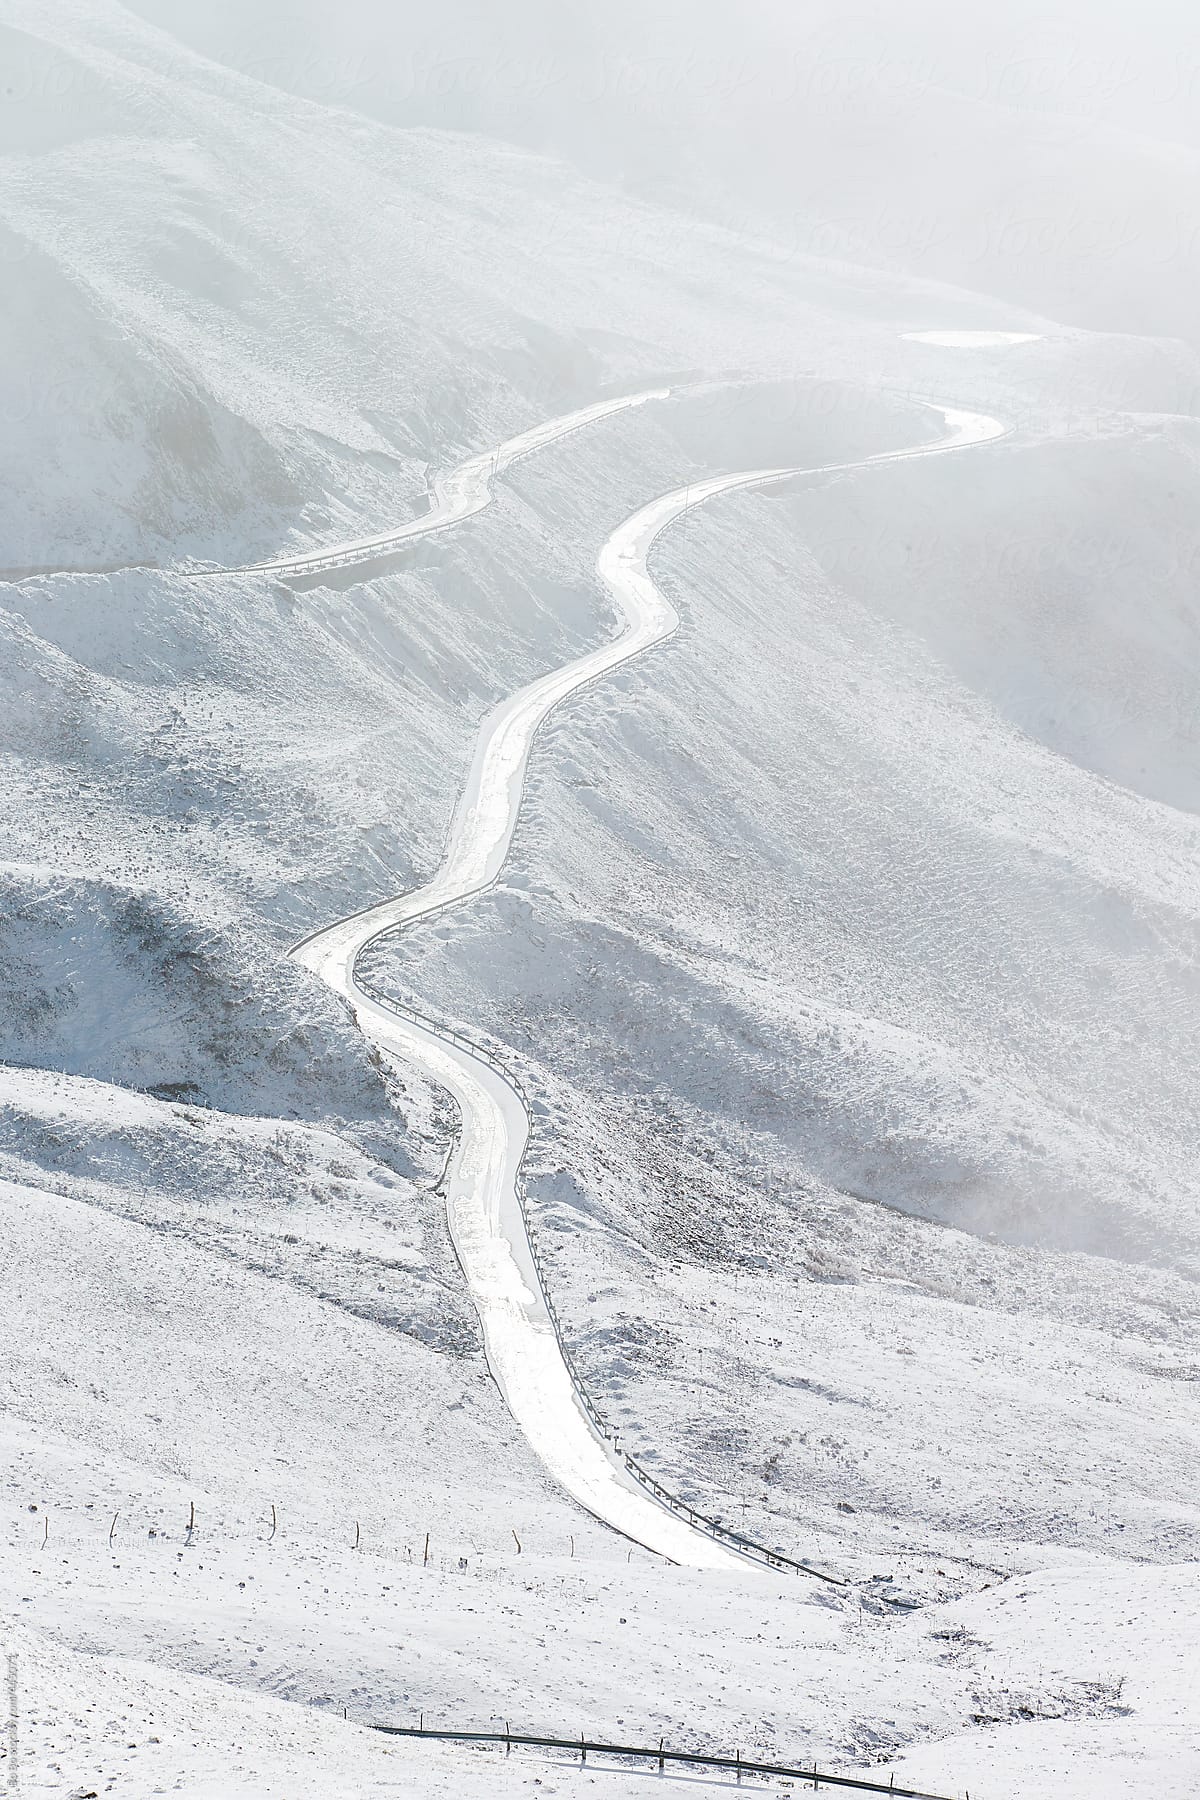 road go around the snowy mountain